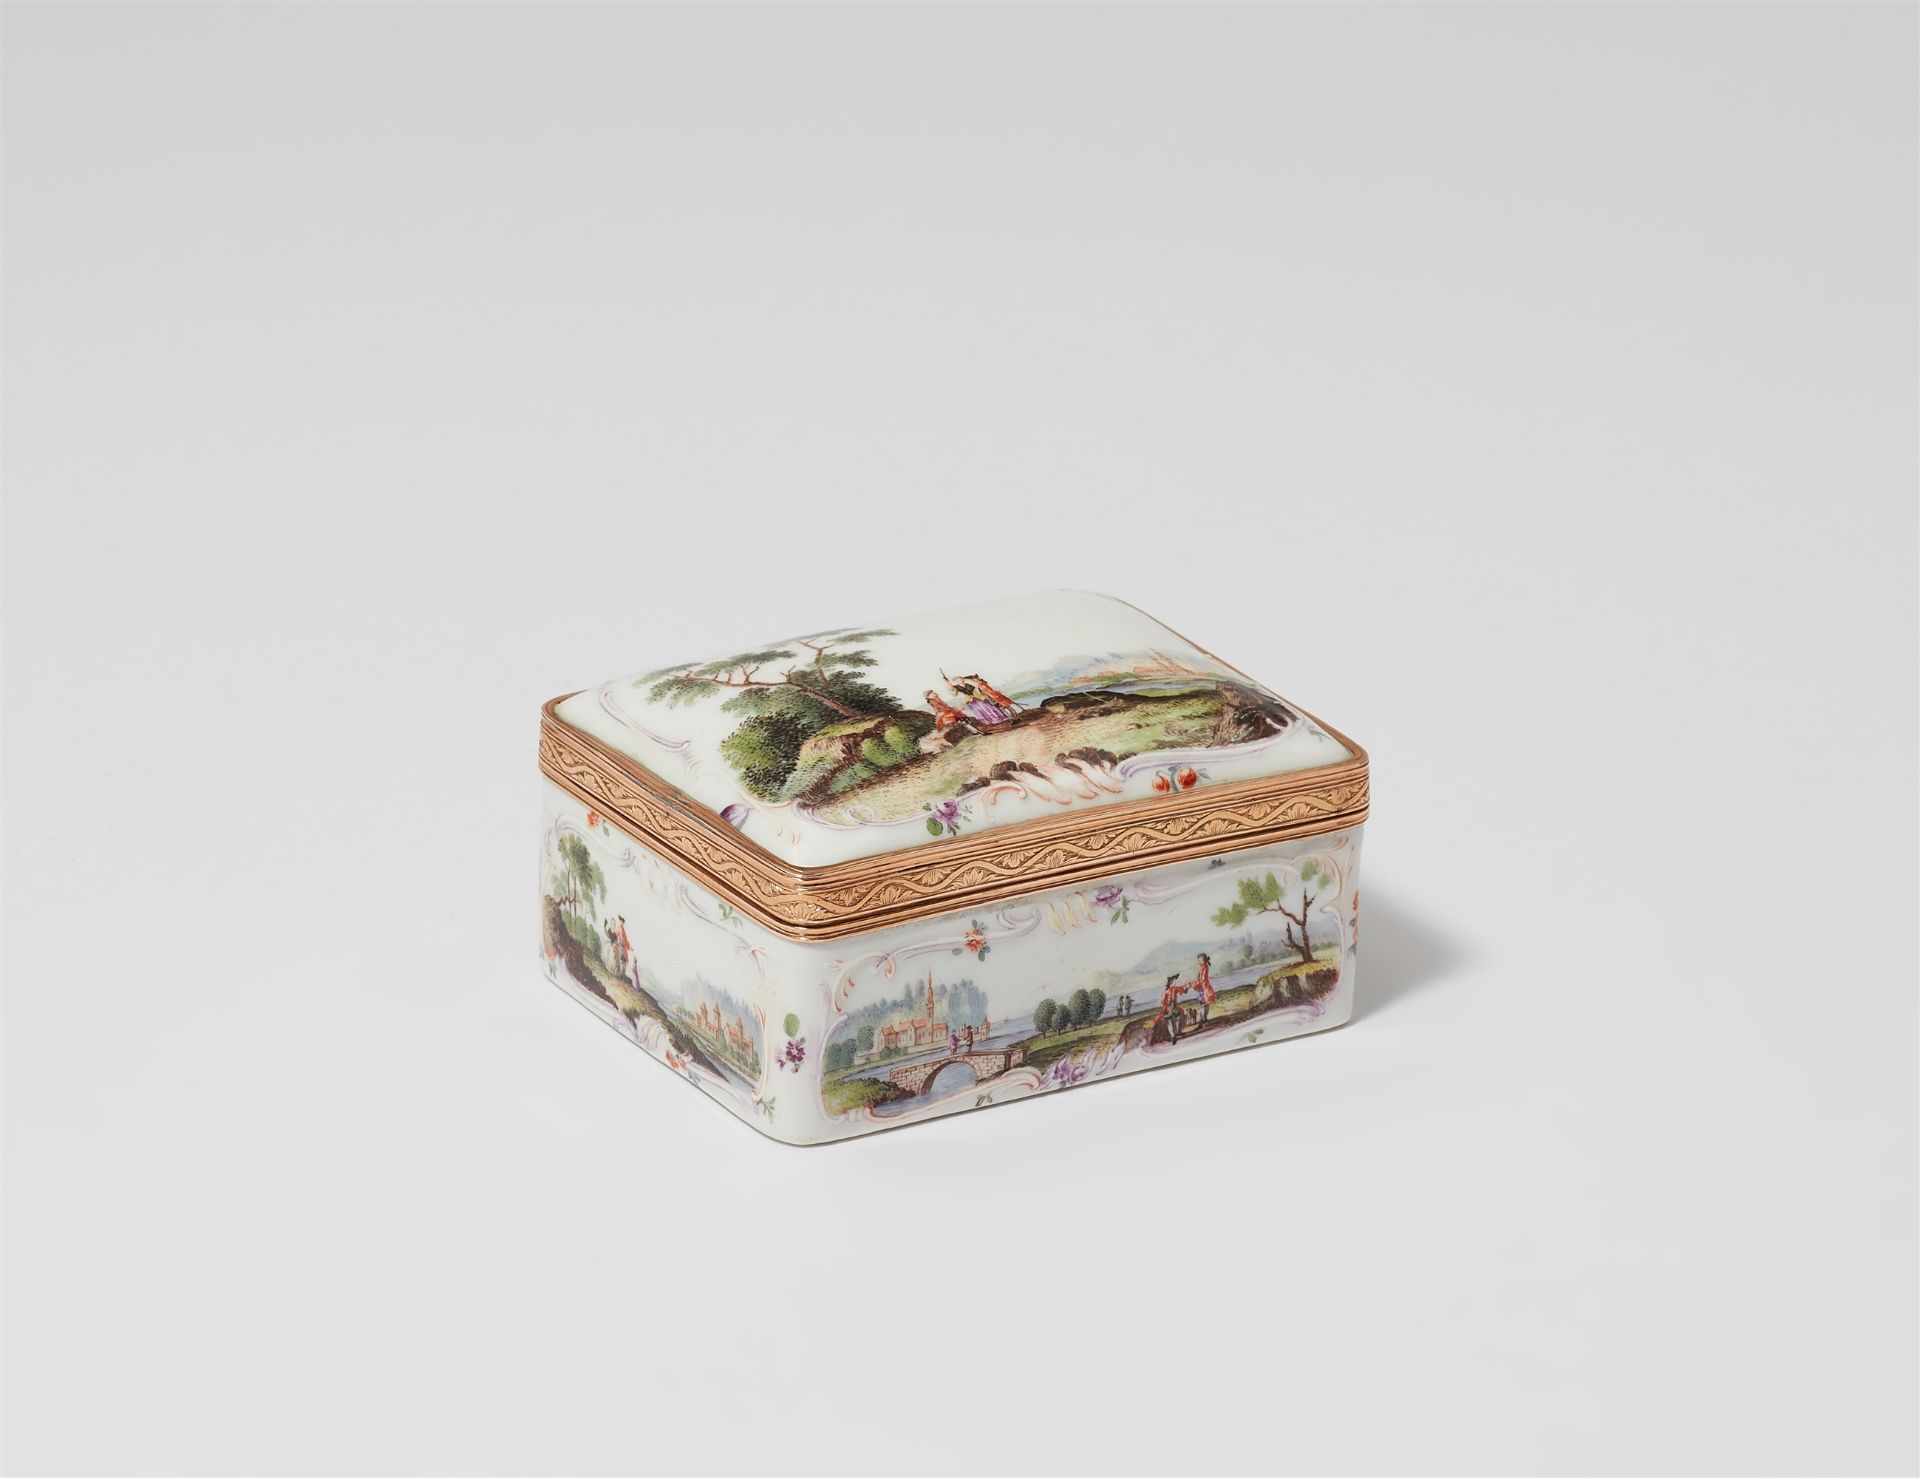 A Meissen porcelain snuff box with landscapes